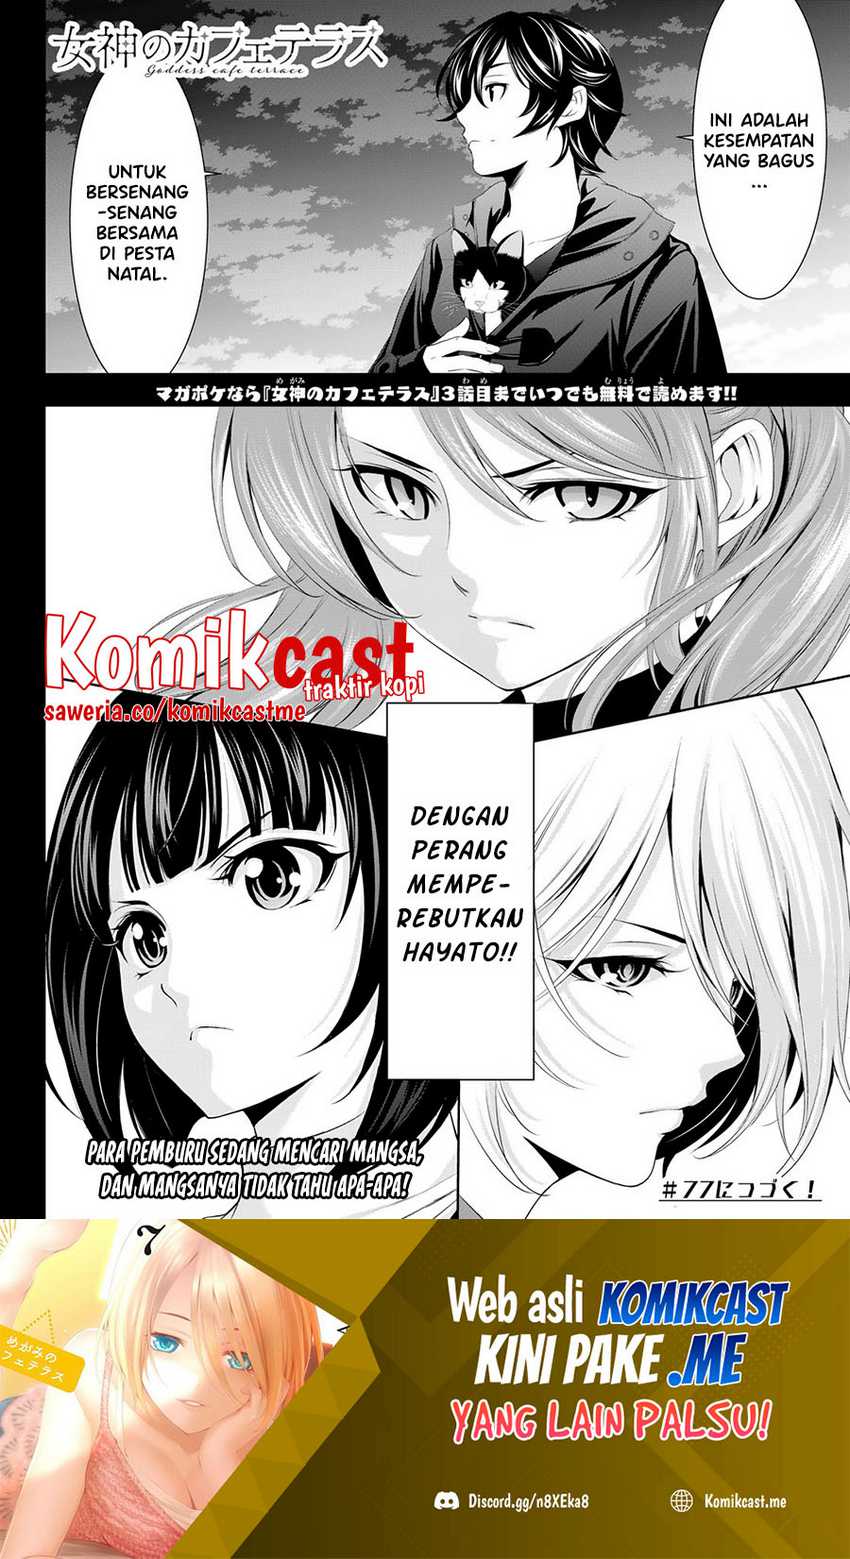 Megami no Kafeterasu (Goddess Café Terrace) Chapter 76